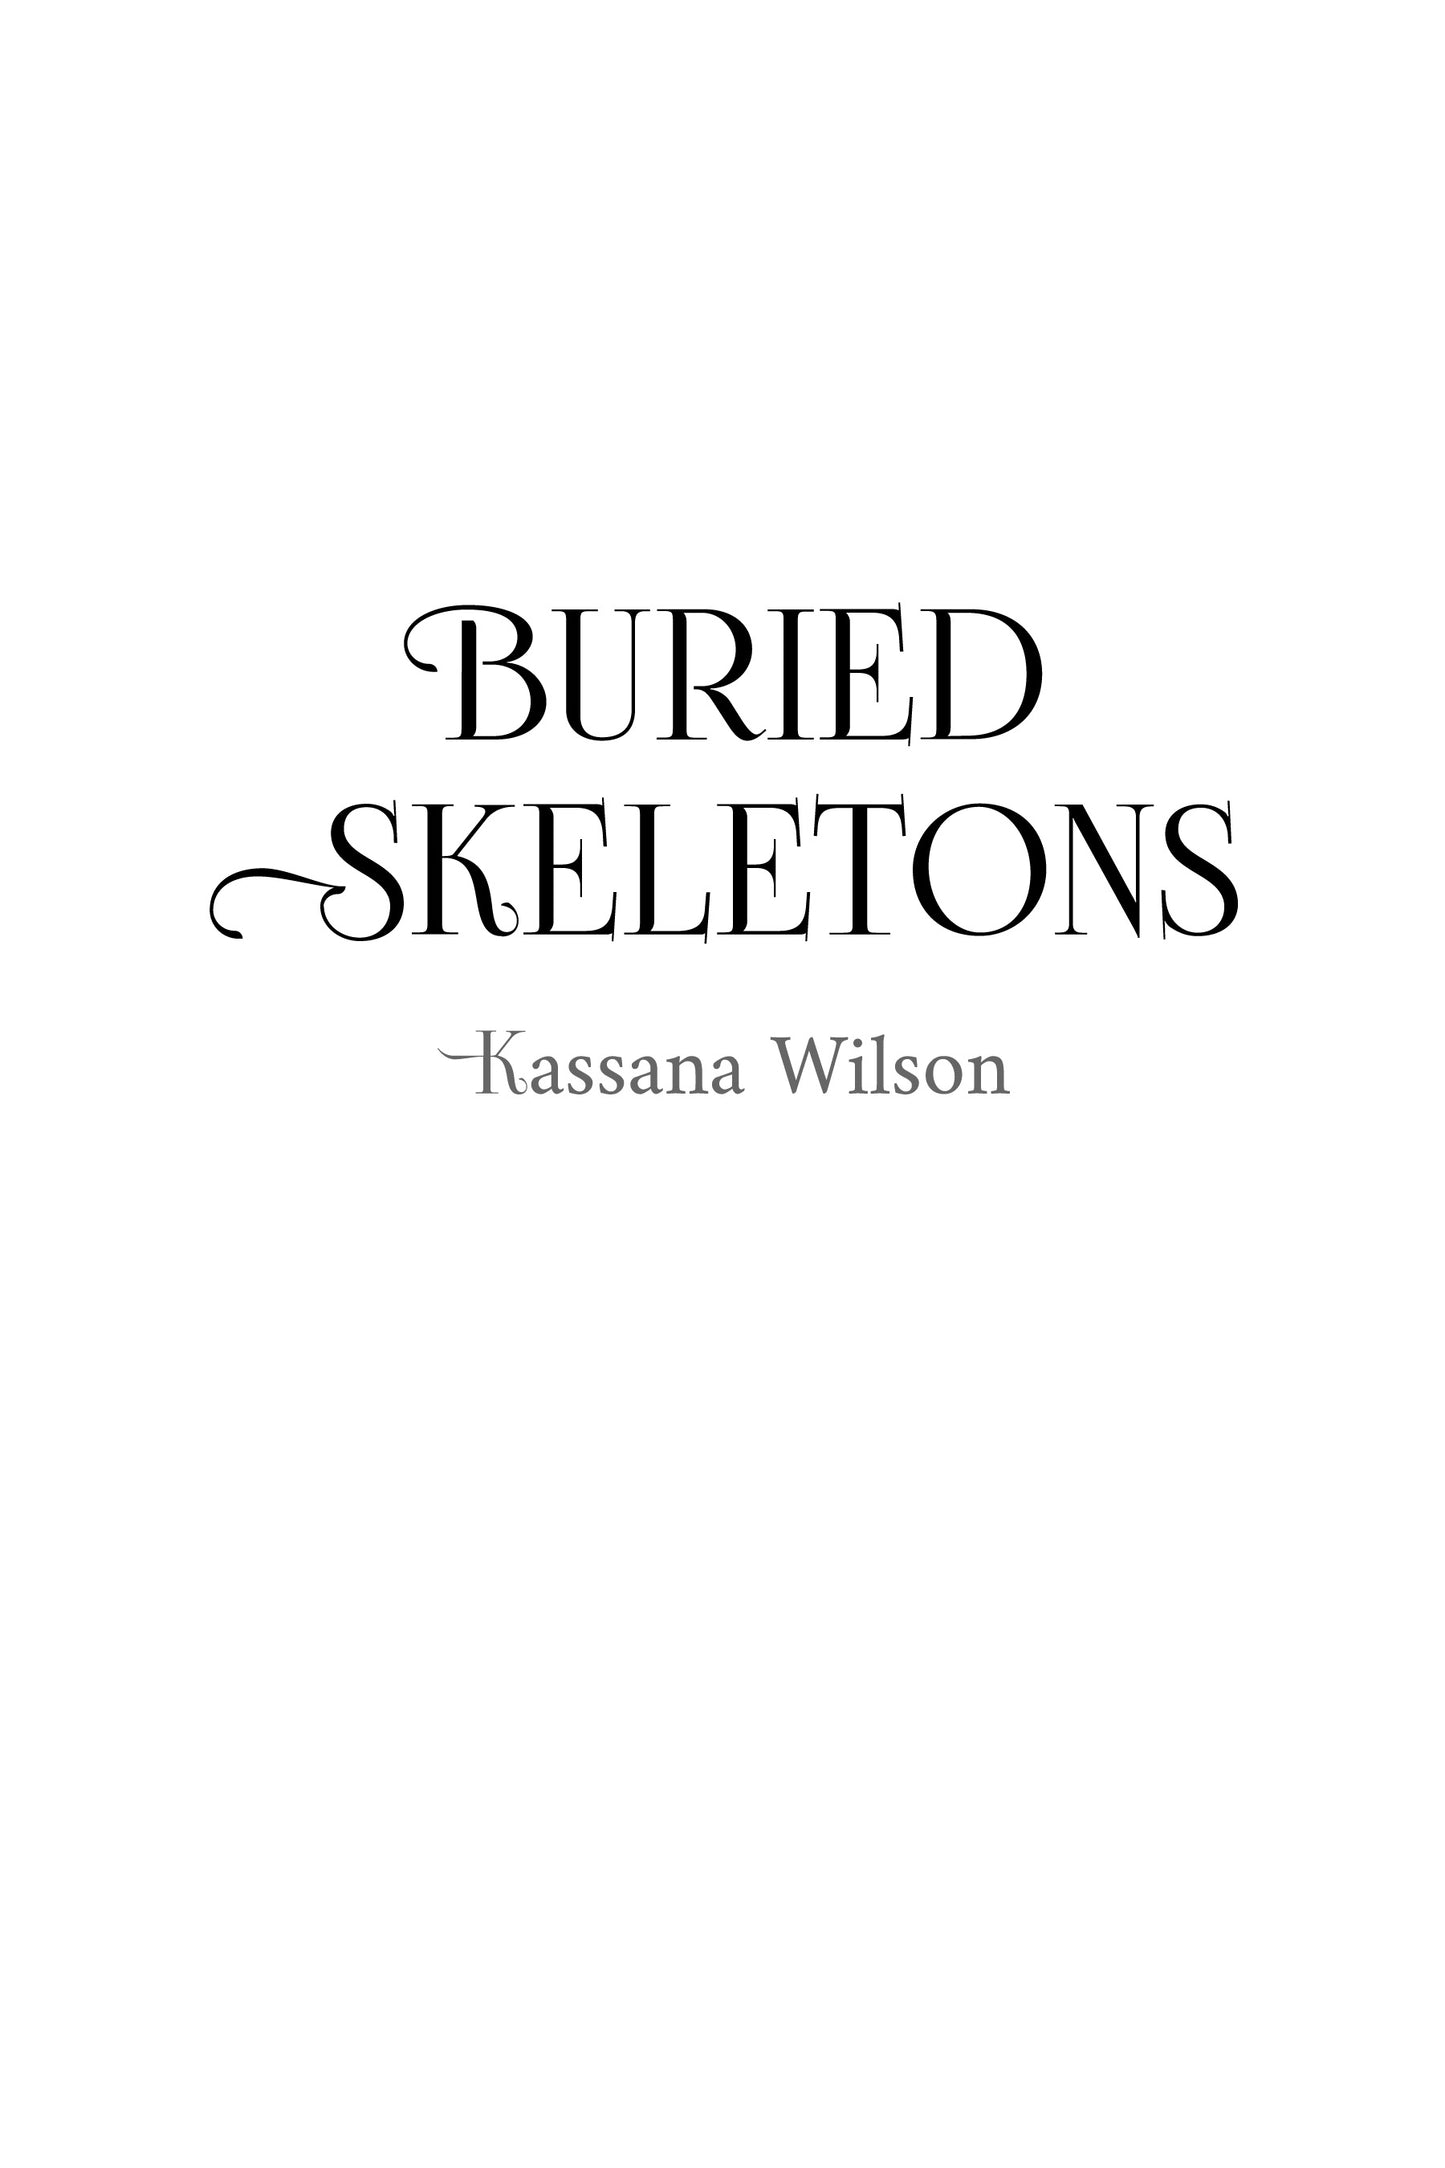 Buried Skeletons by Kassana Wilson